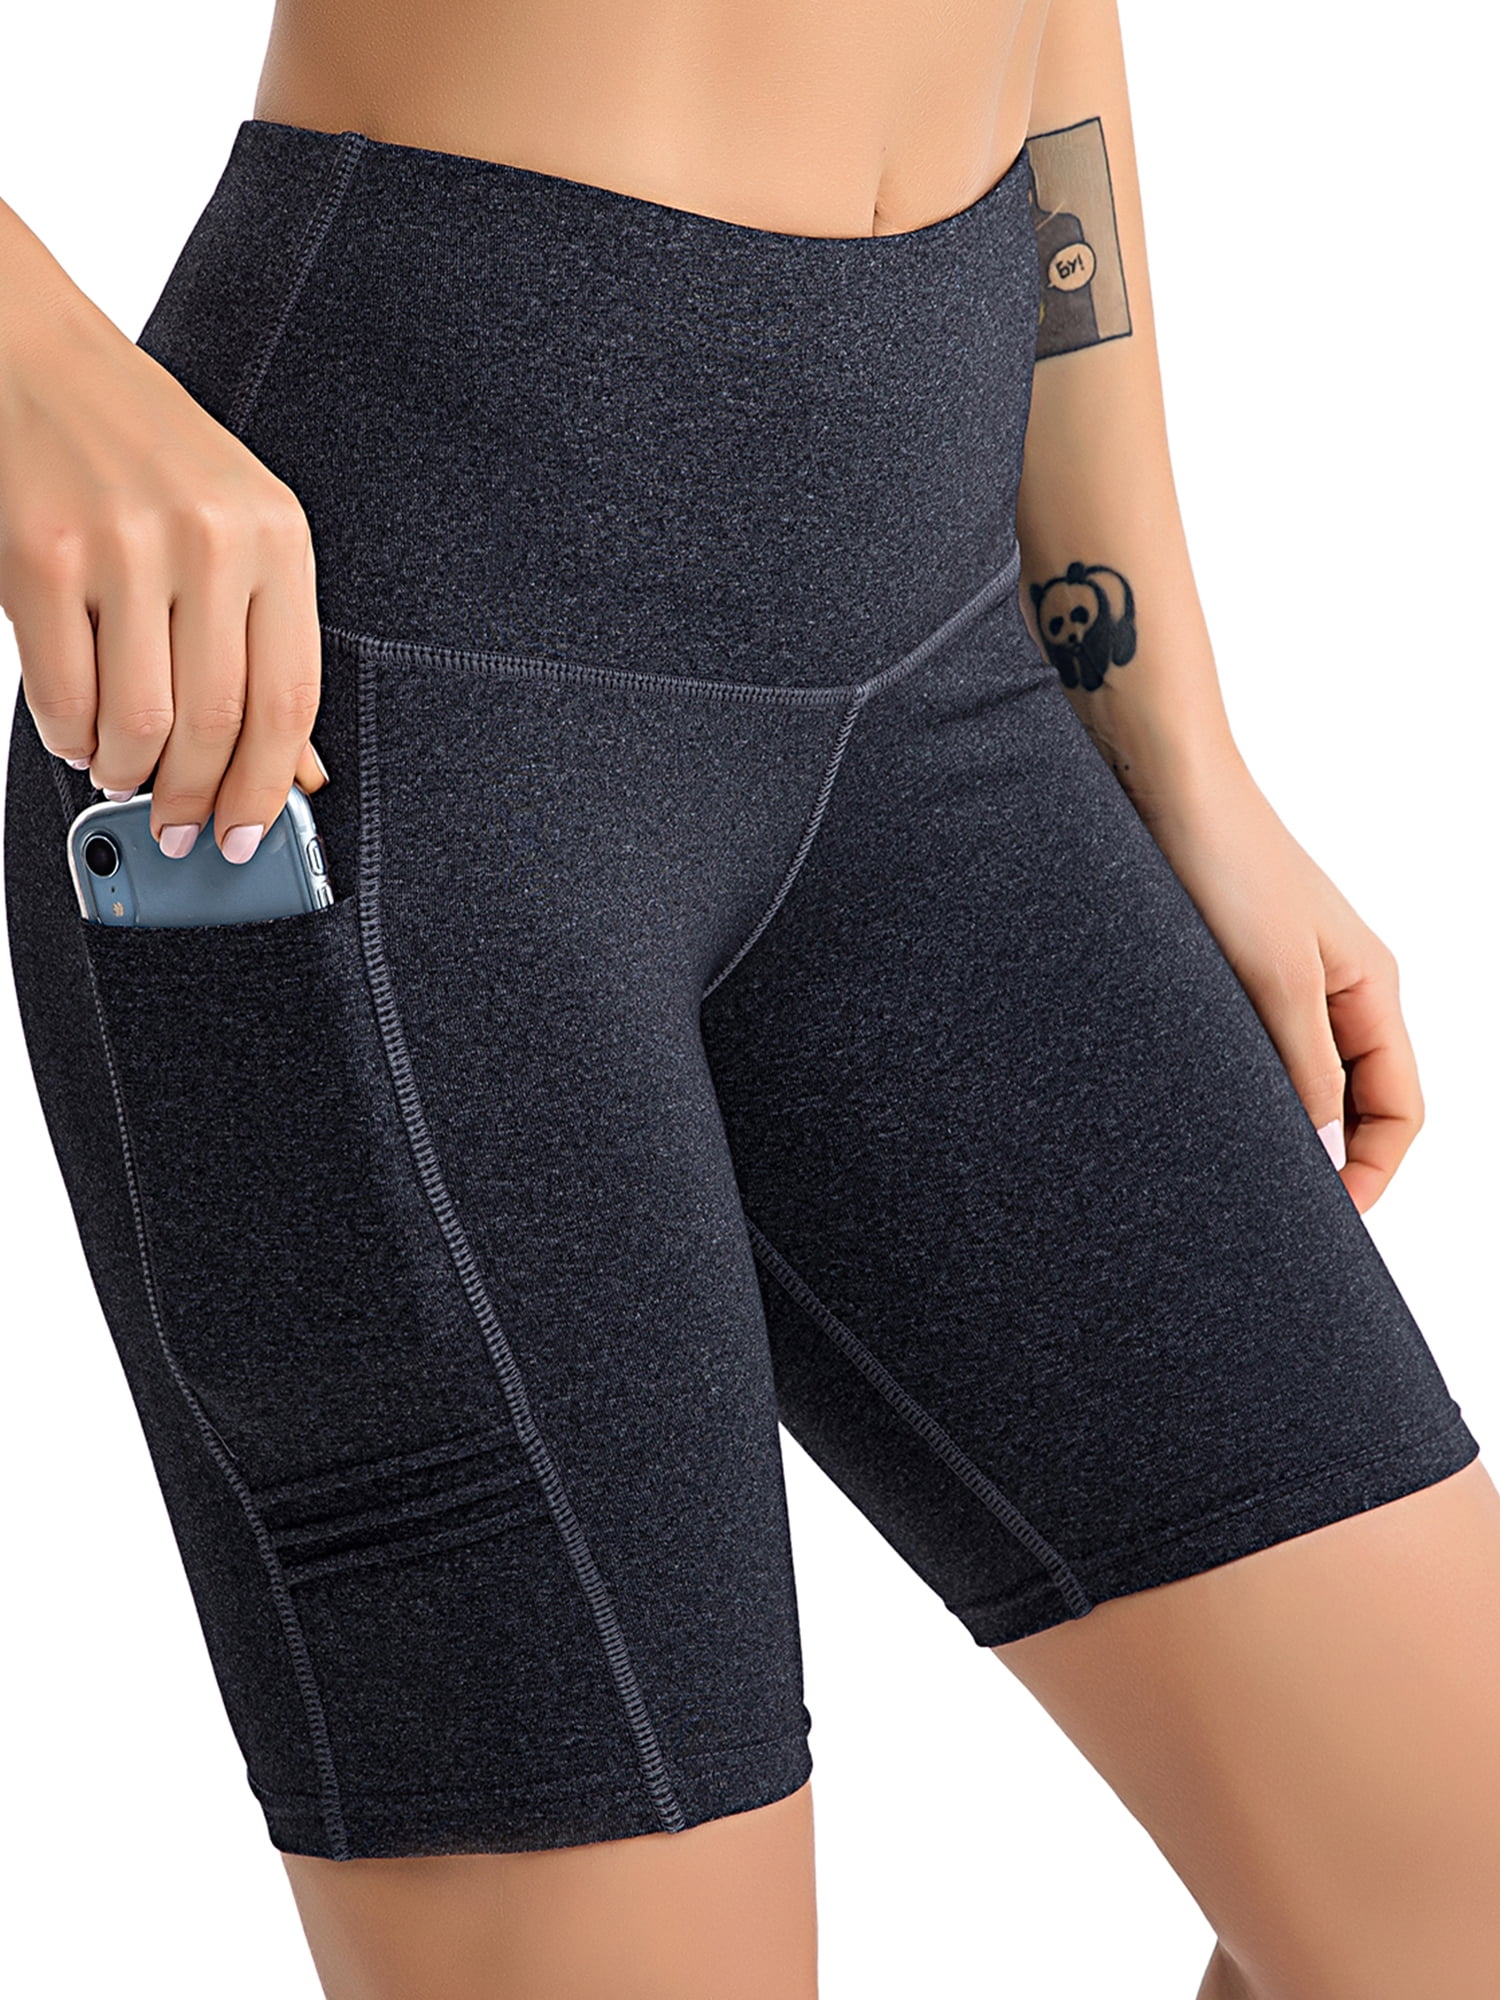 Women's High Waist Yoga Shorts with Side Pockets Tummy Control Running Gym Workout Biker Shorts for Women 8 /3 